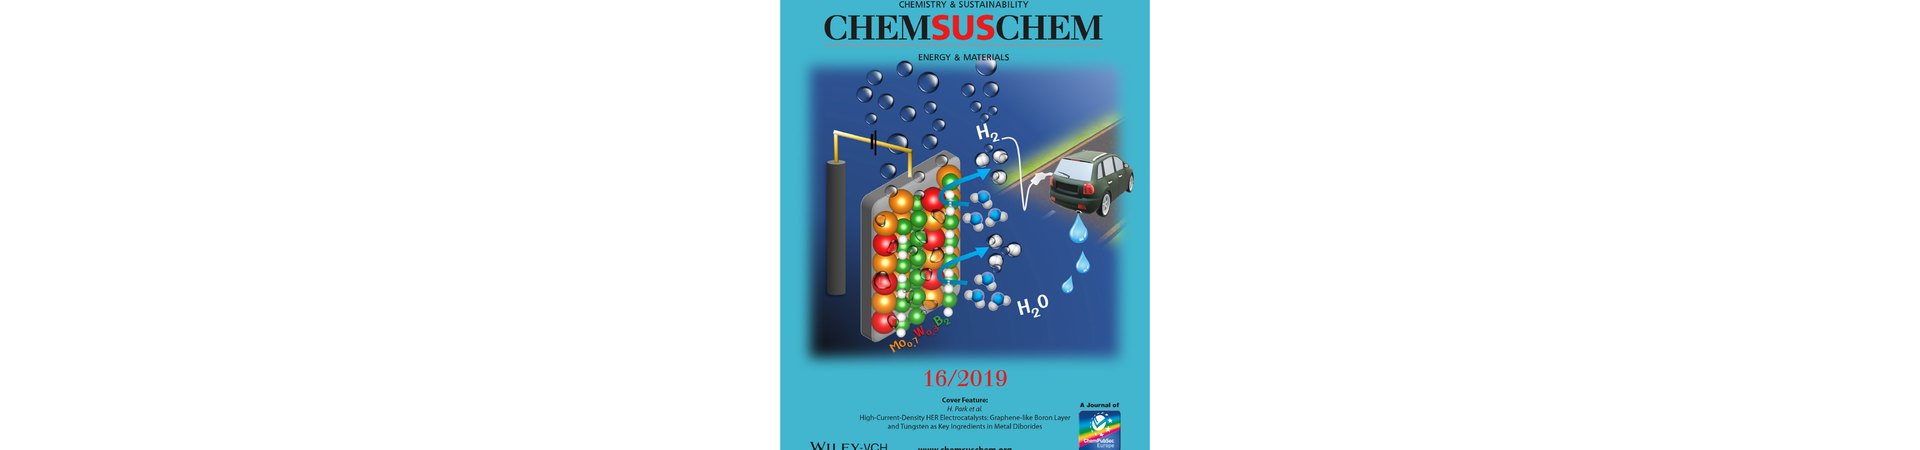 Chemsuschem cover